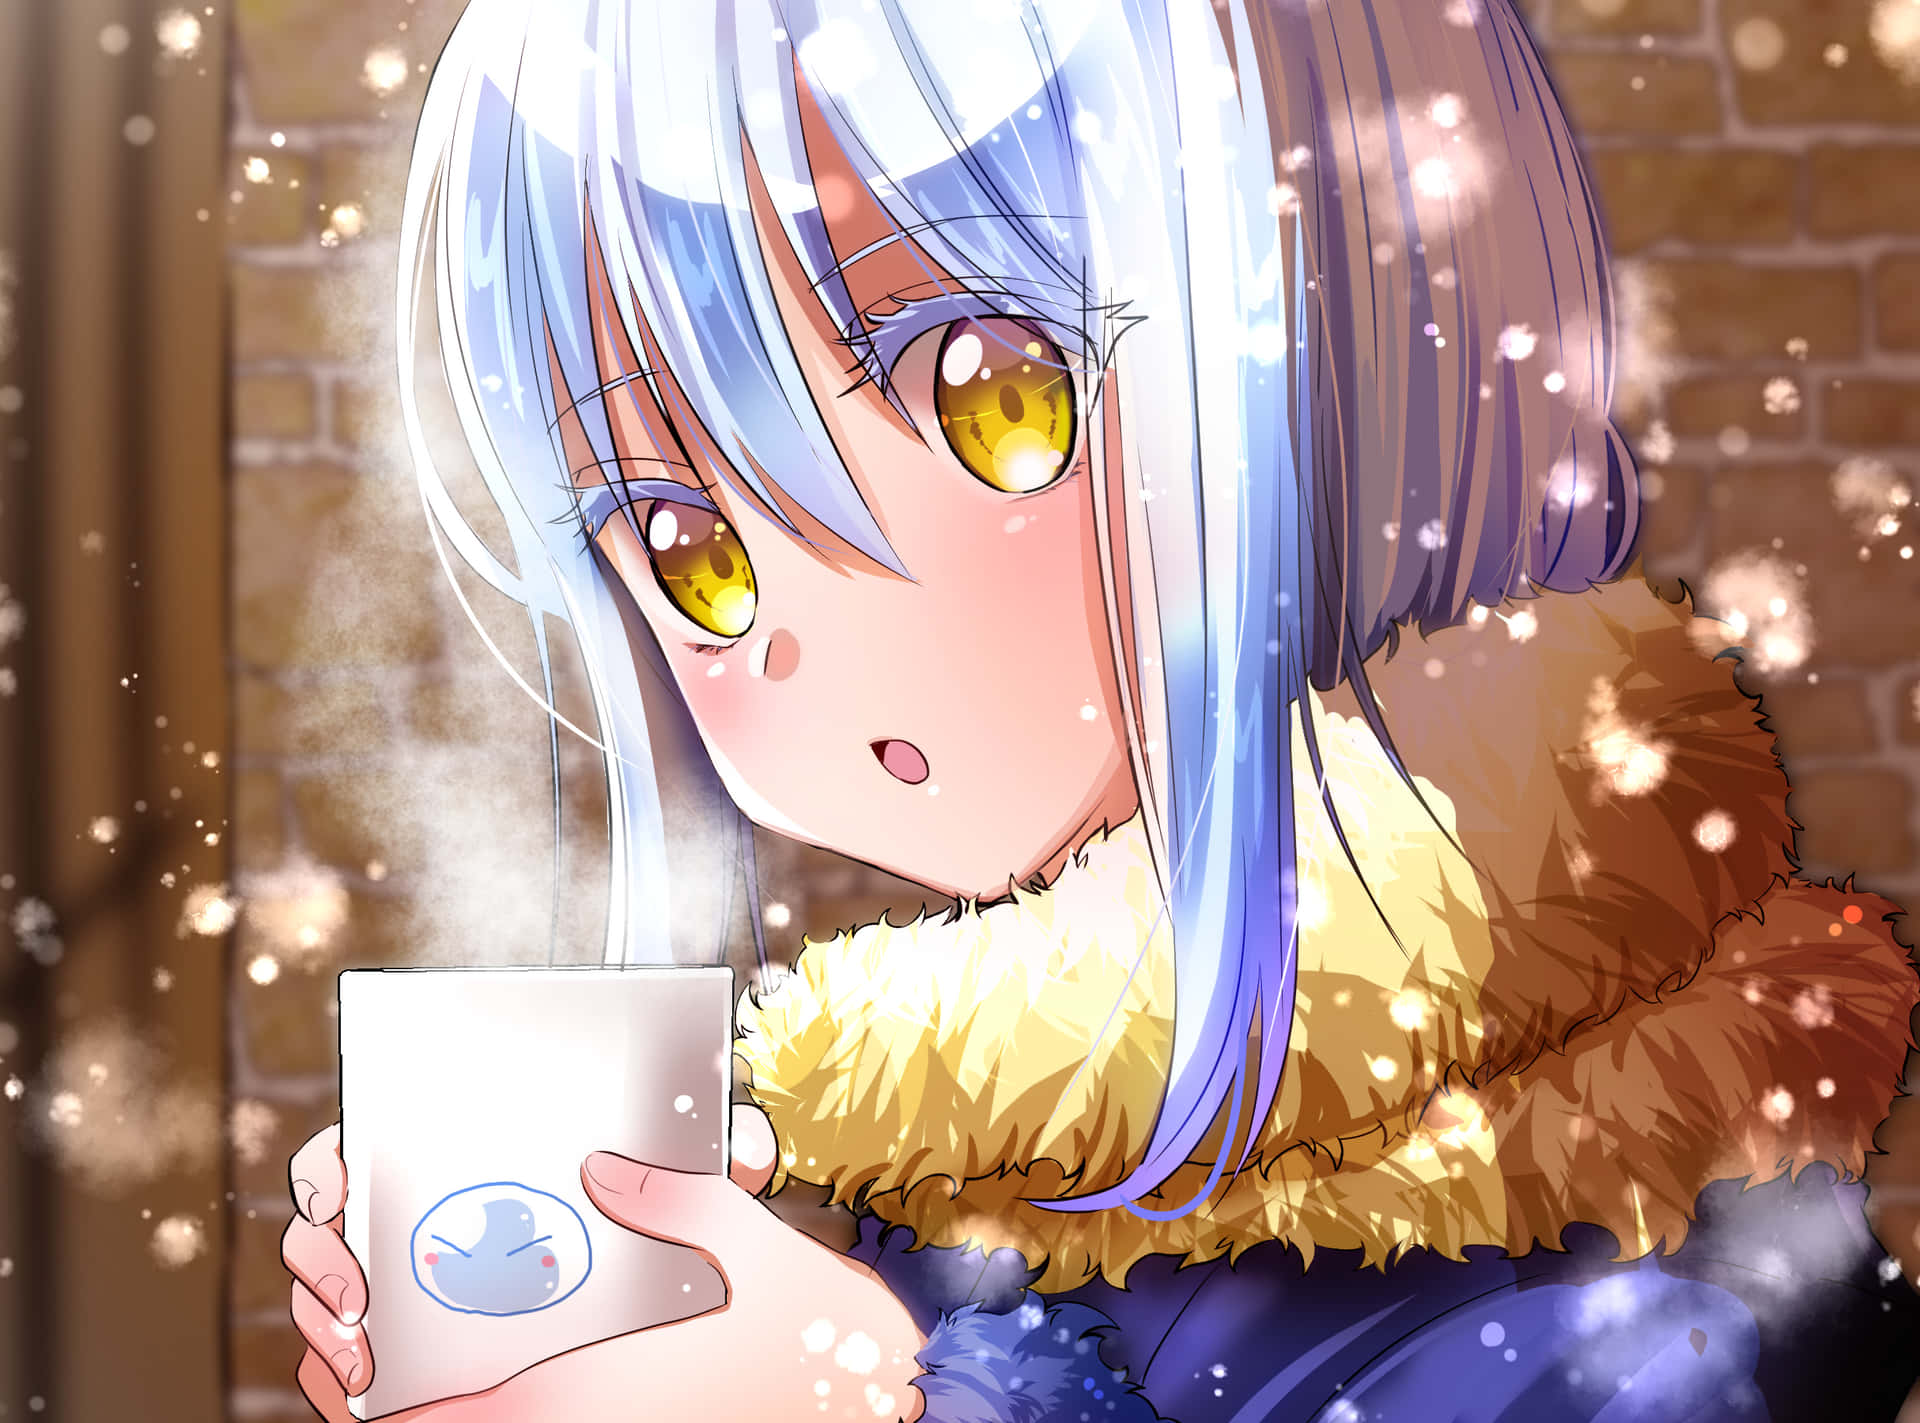 Rimuru Pfp With Hot Drink Background